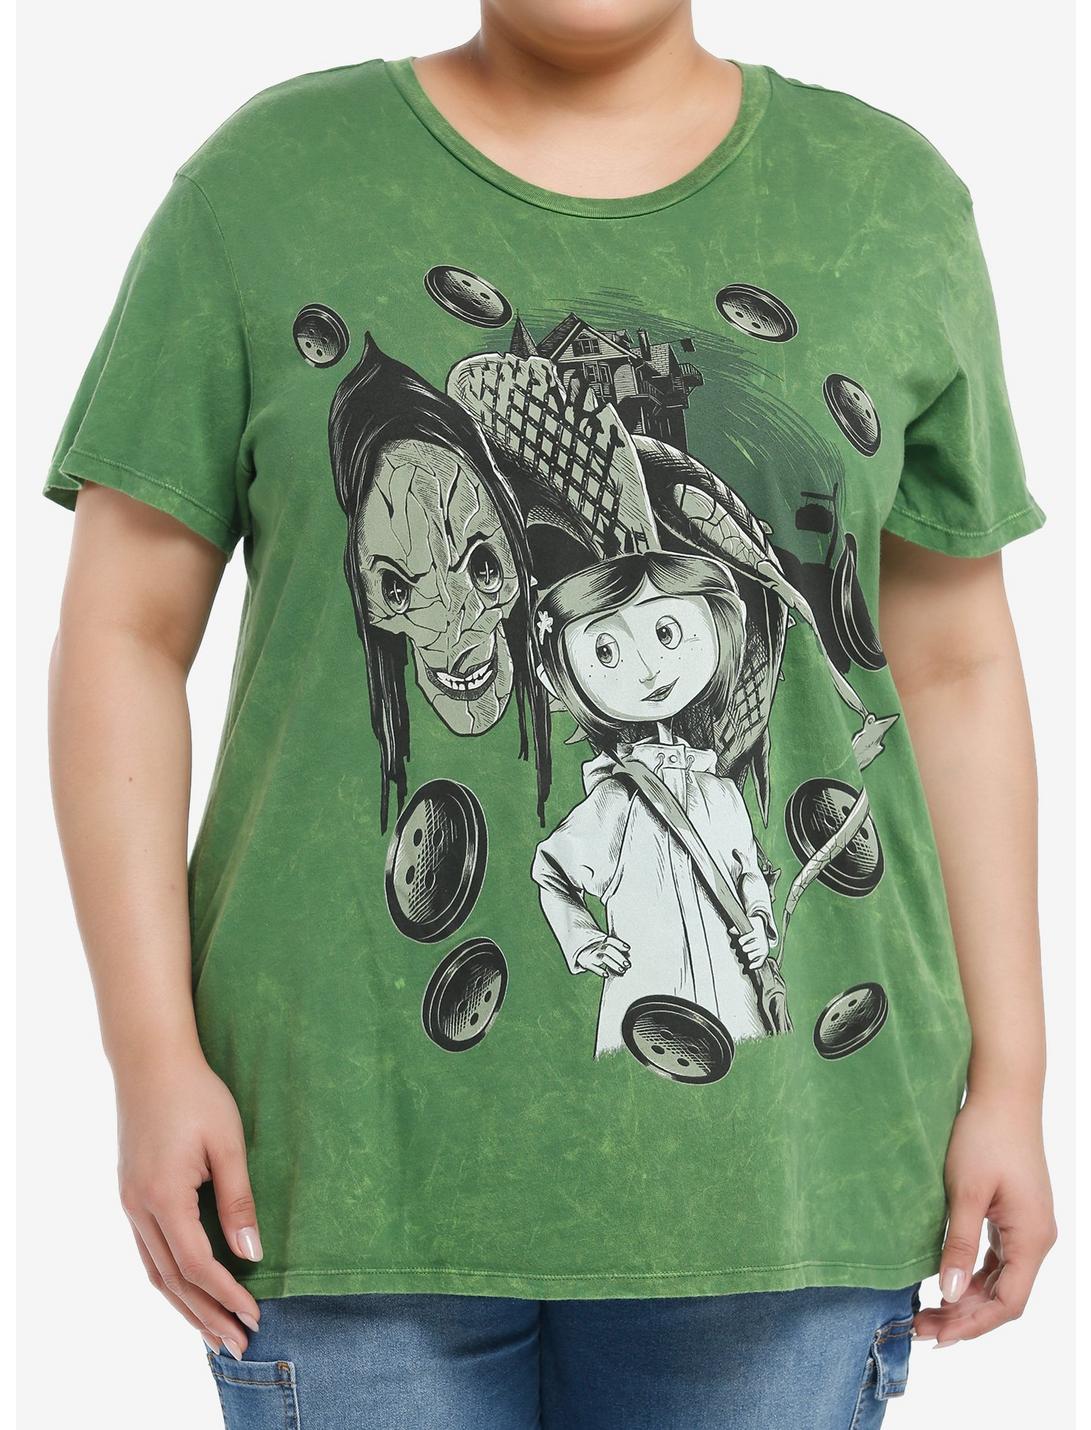 Coraline The Beldam Green Wash Boyfriend Fit Girls T-Shirt Plus Size, MULTI, hi-res